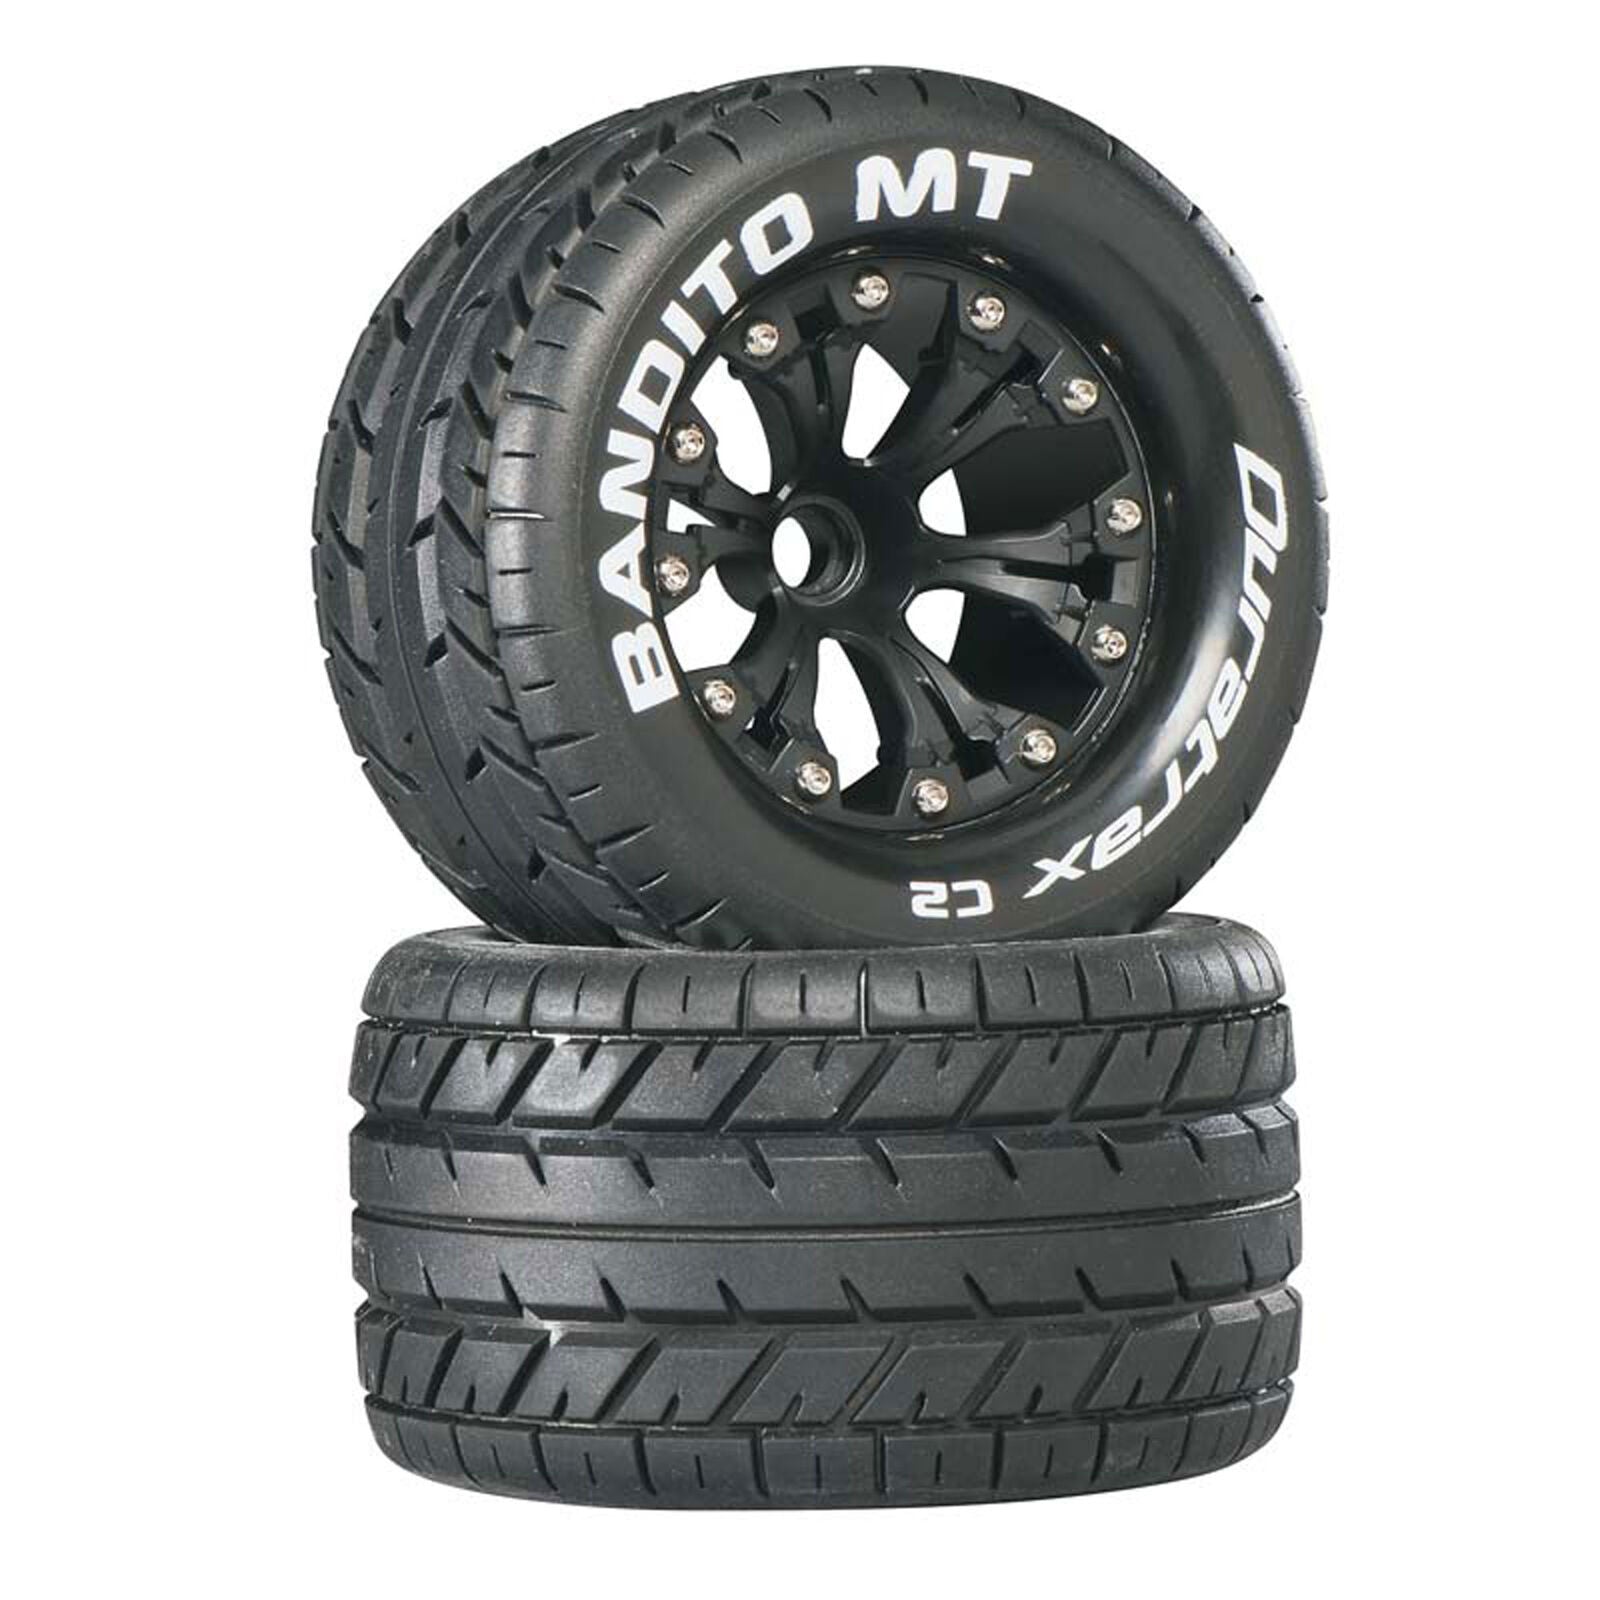 DURATRAX DTXC3500 Bandito MT 2.8" 2WD Mounted Front C2 Tires, Black (2)